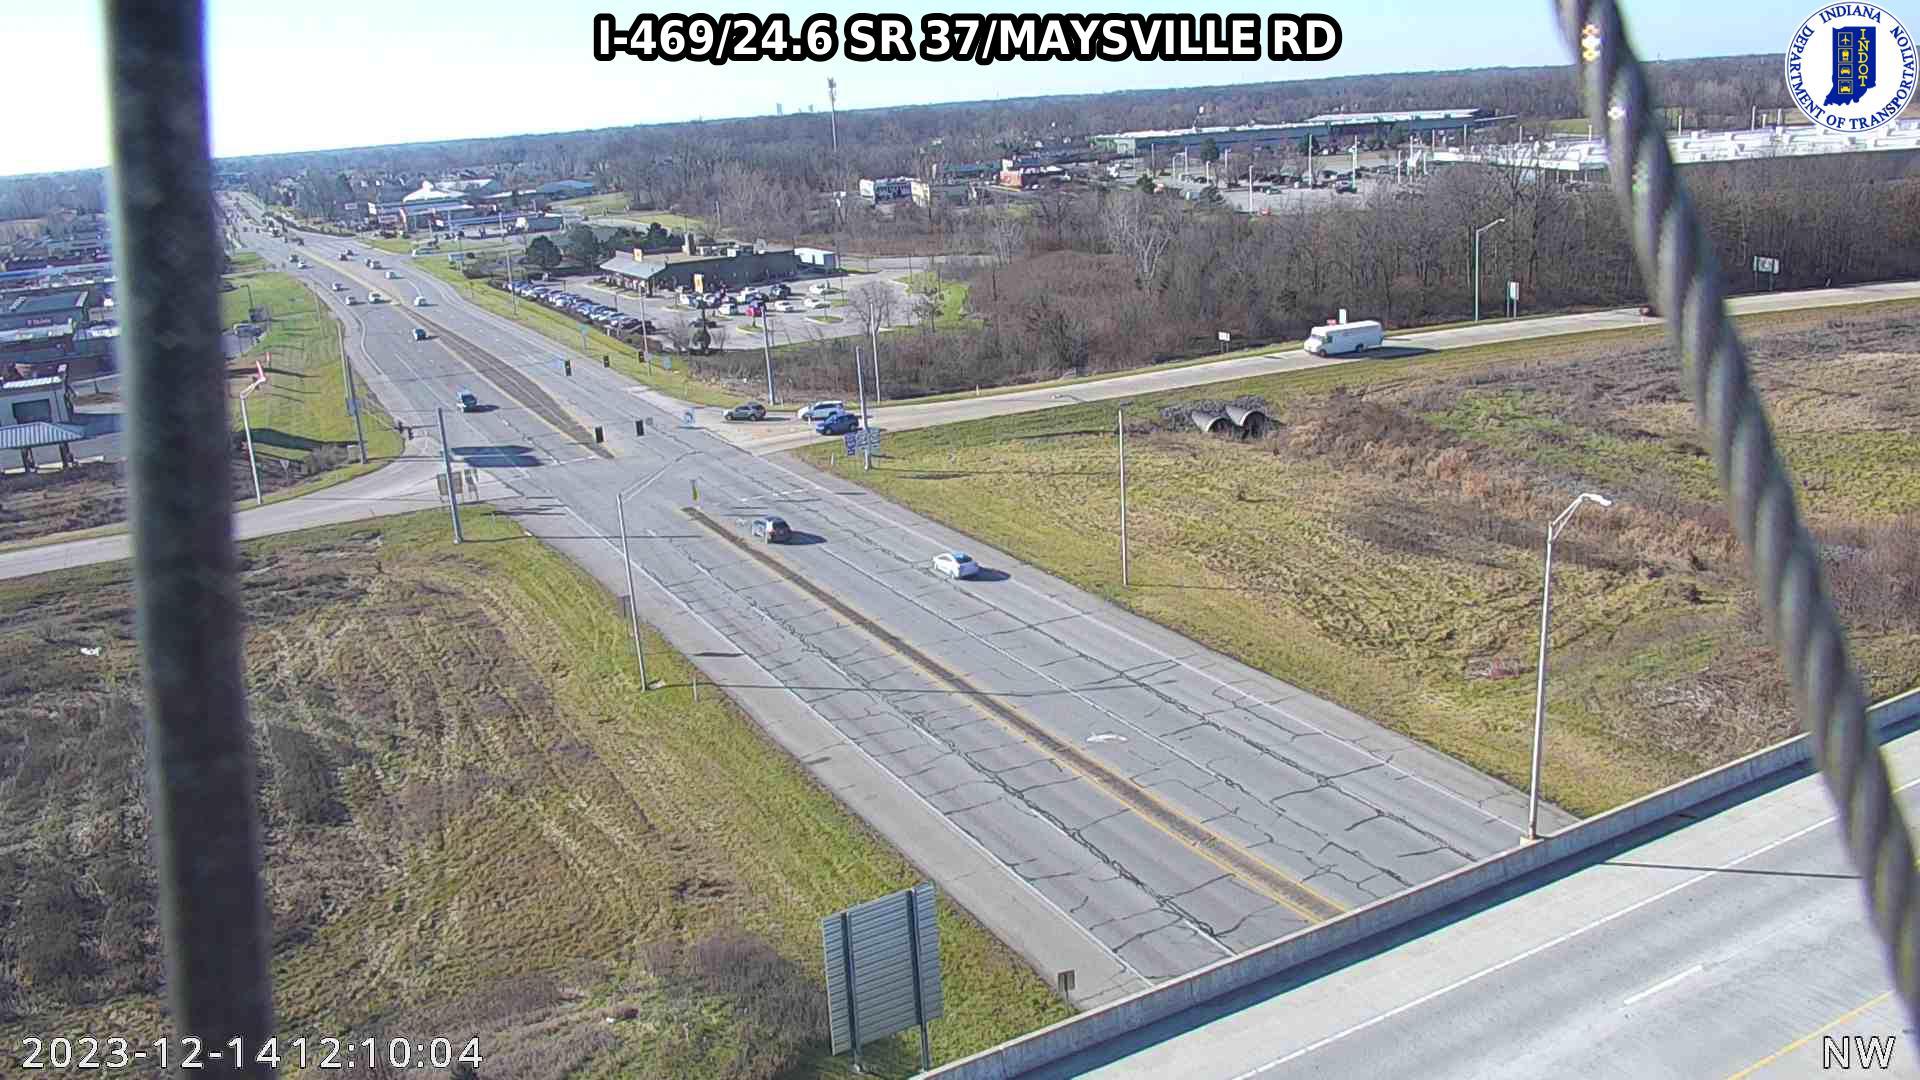 Traffic Cam Thurman: I-469: I-469/24.6 SR 37/MAYSVILLE RD Player